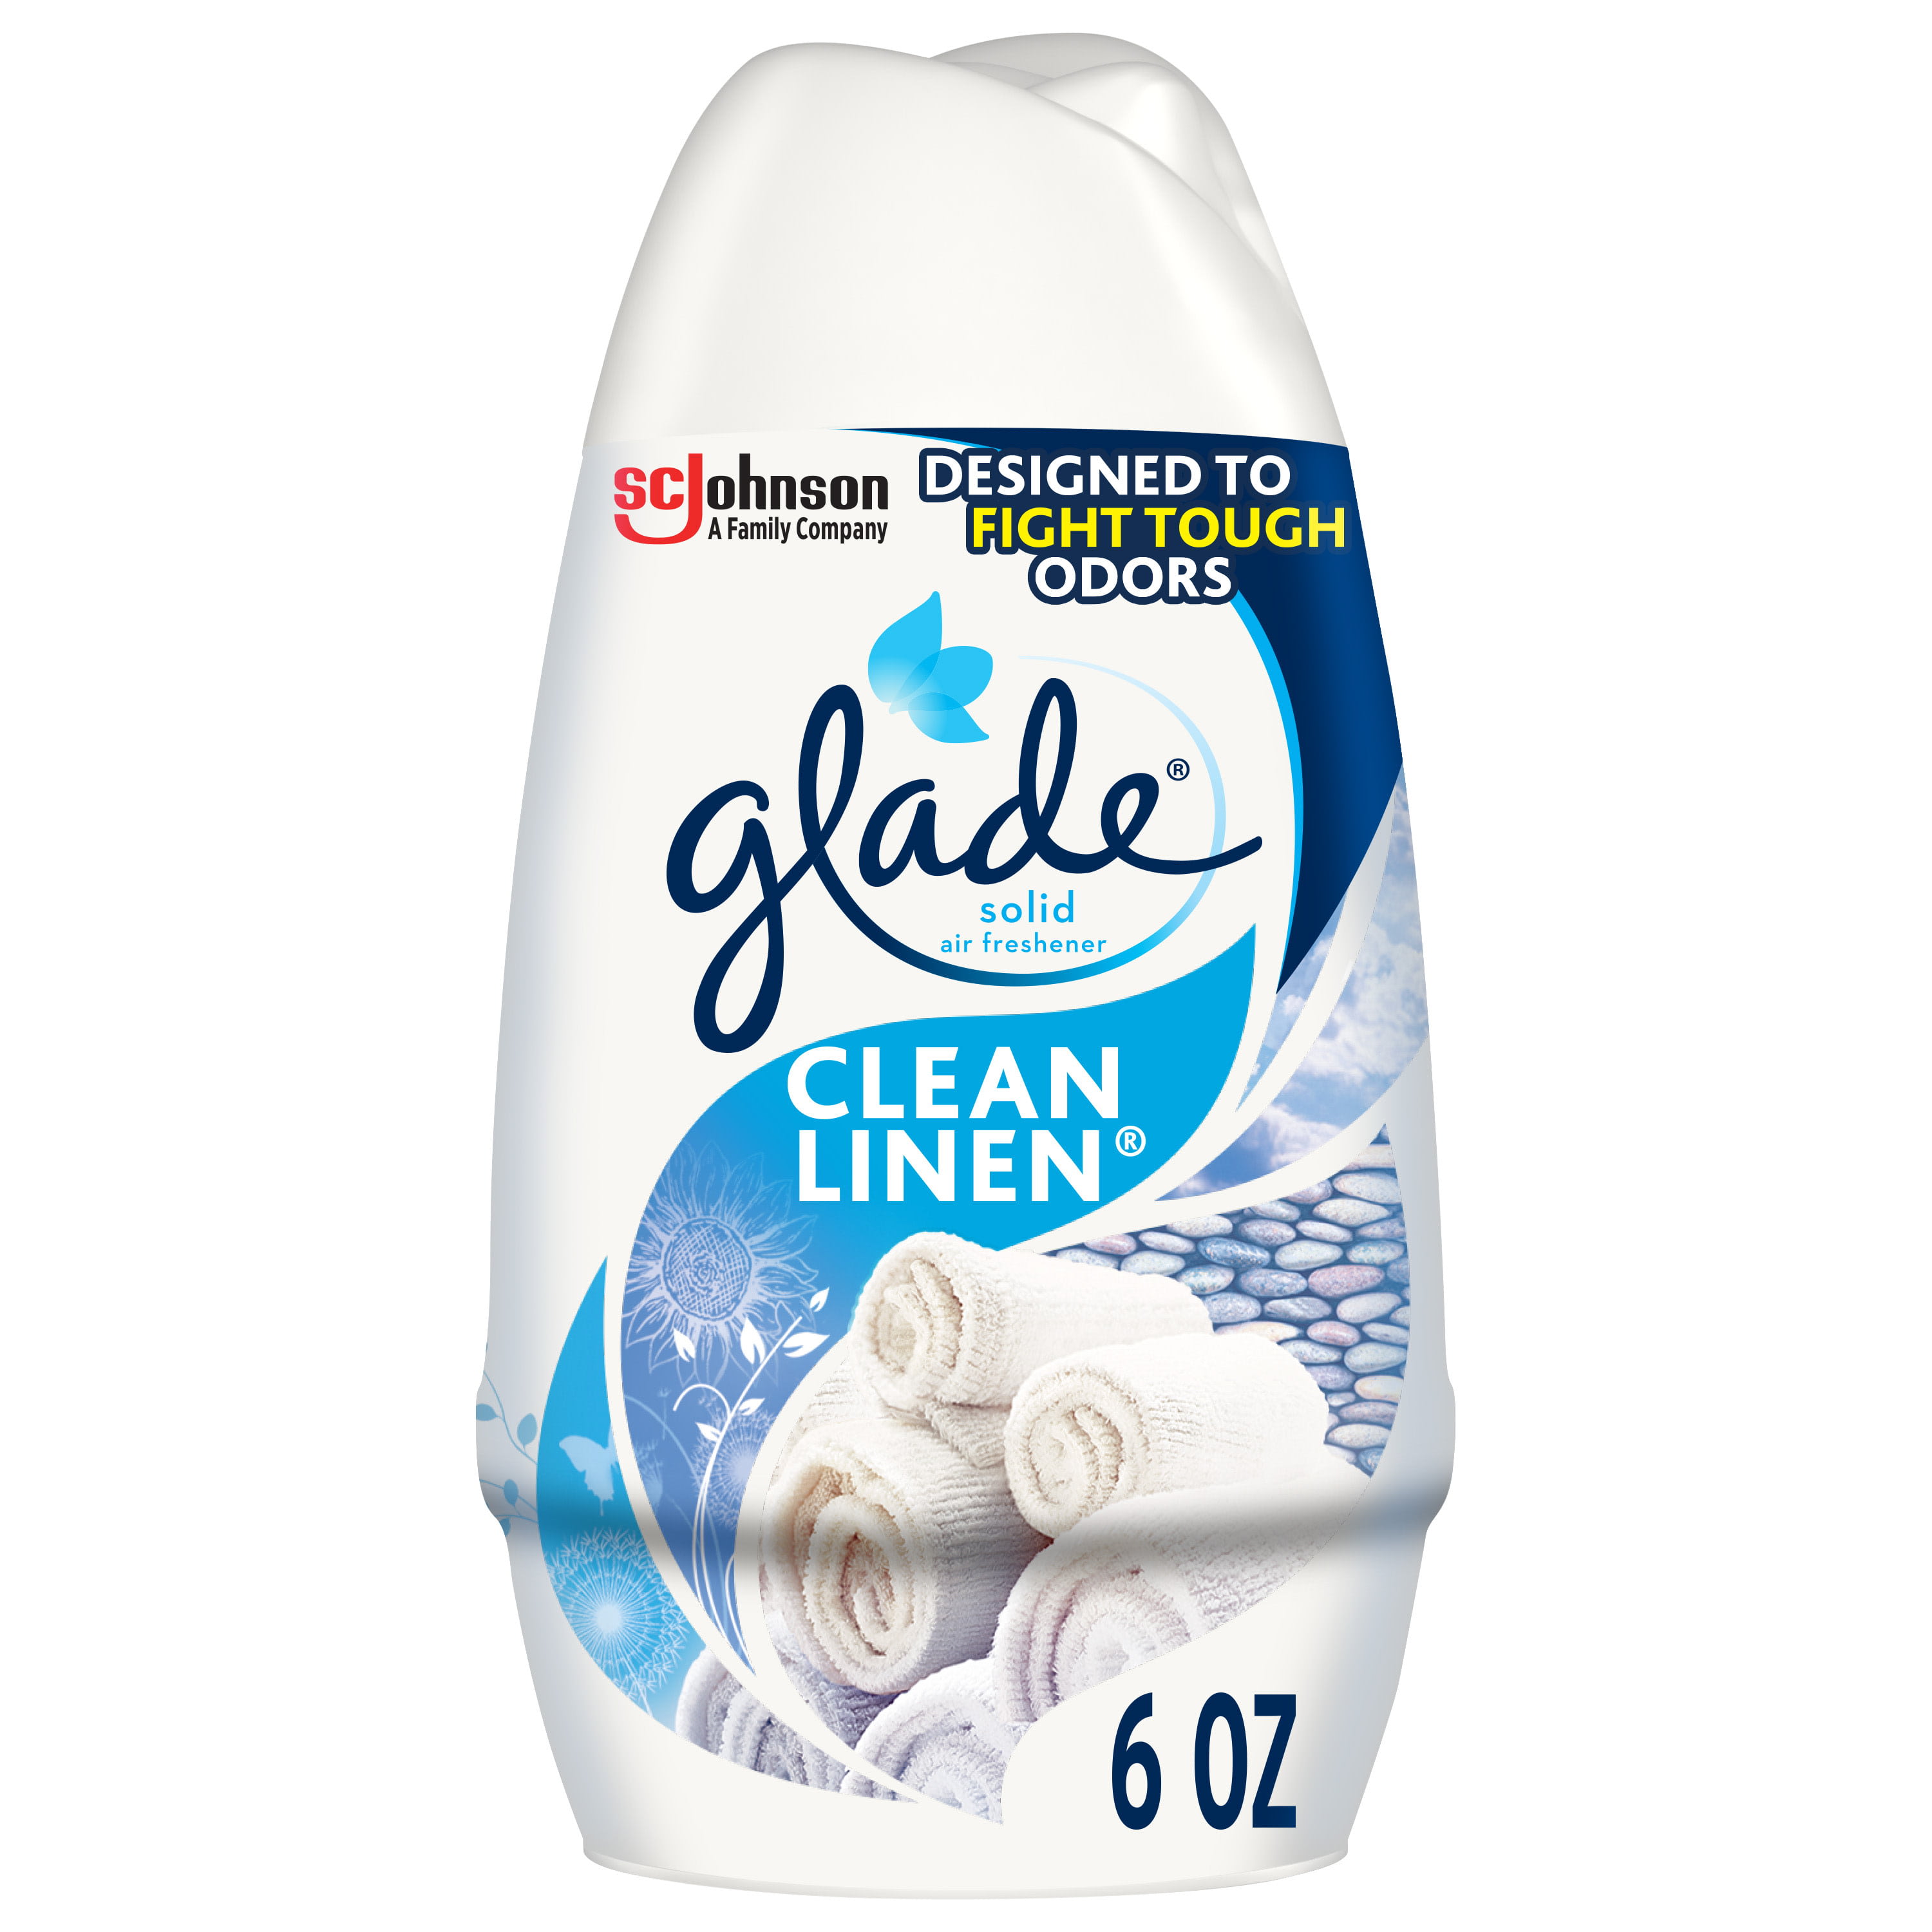 Glade Solid Air Freshener, 6 oz., Clean Linen